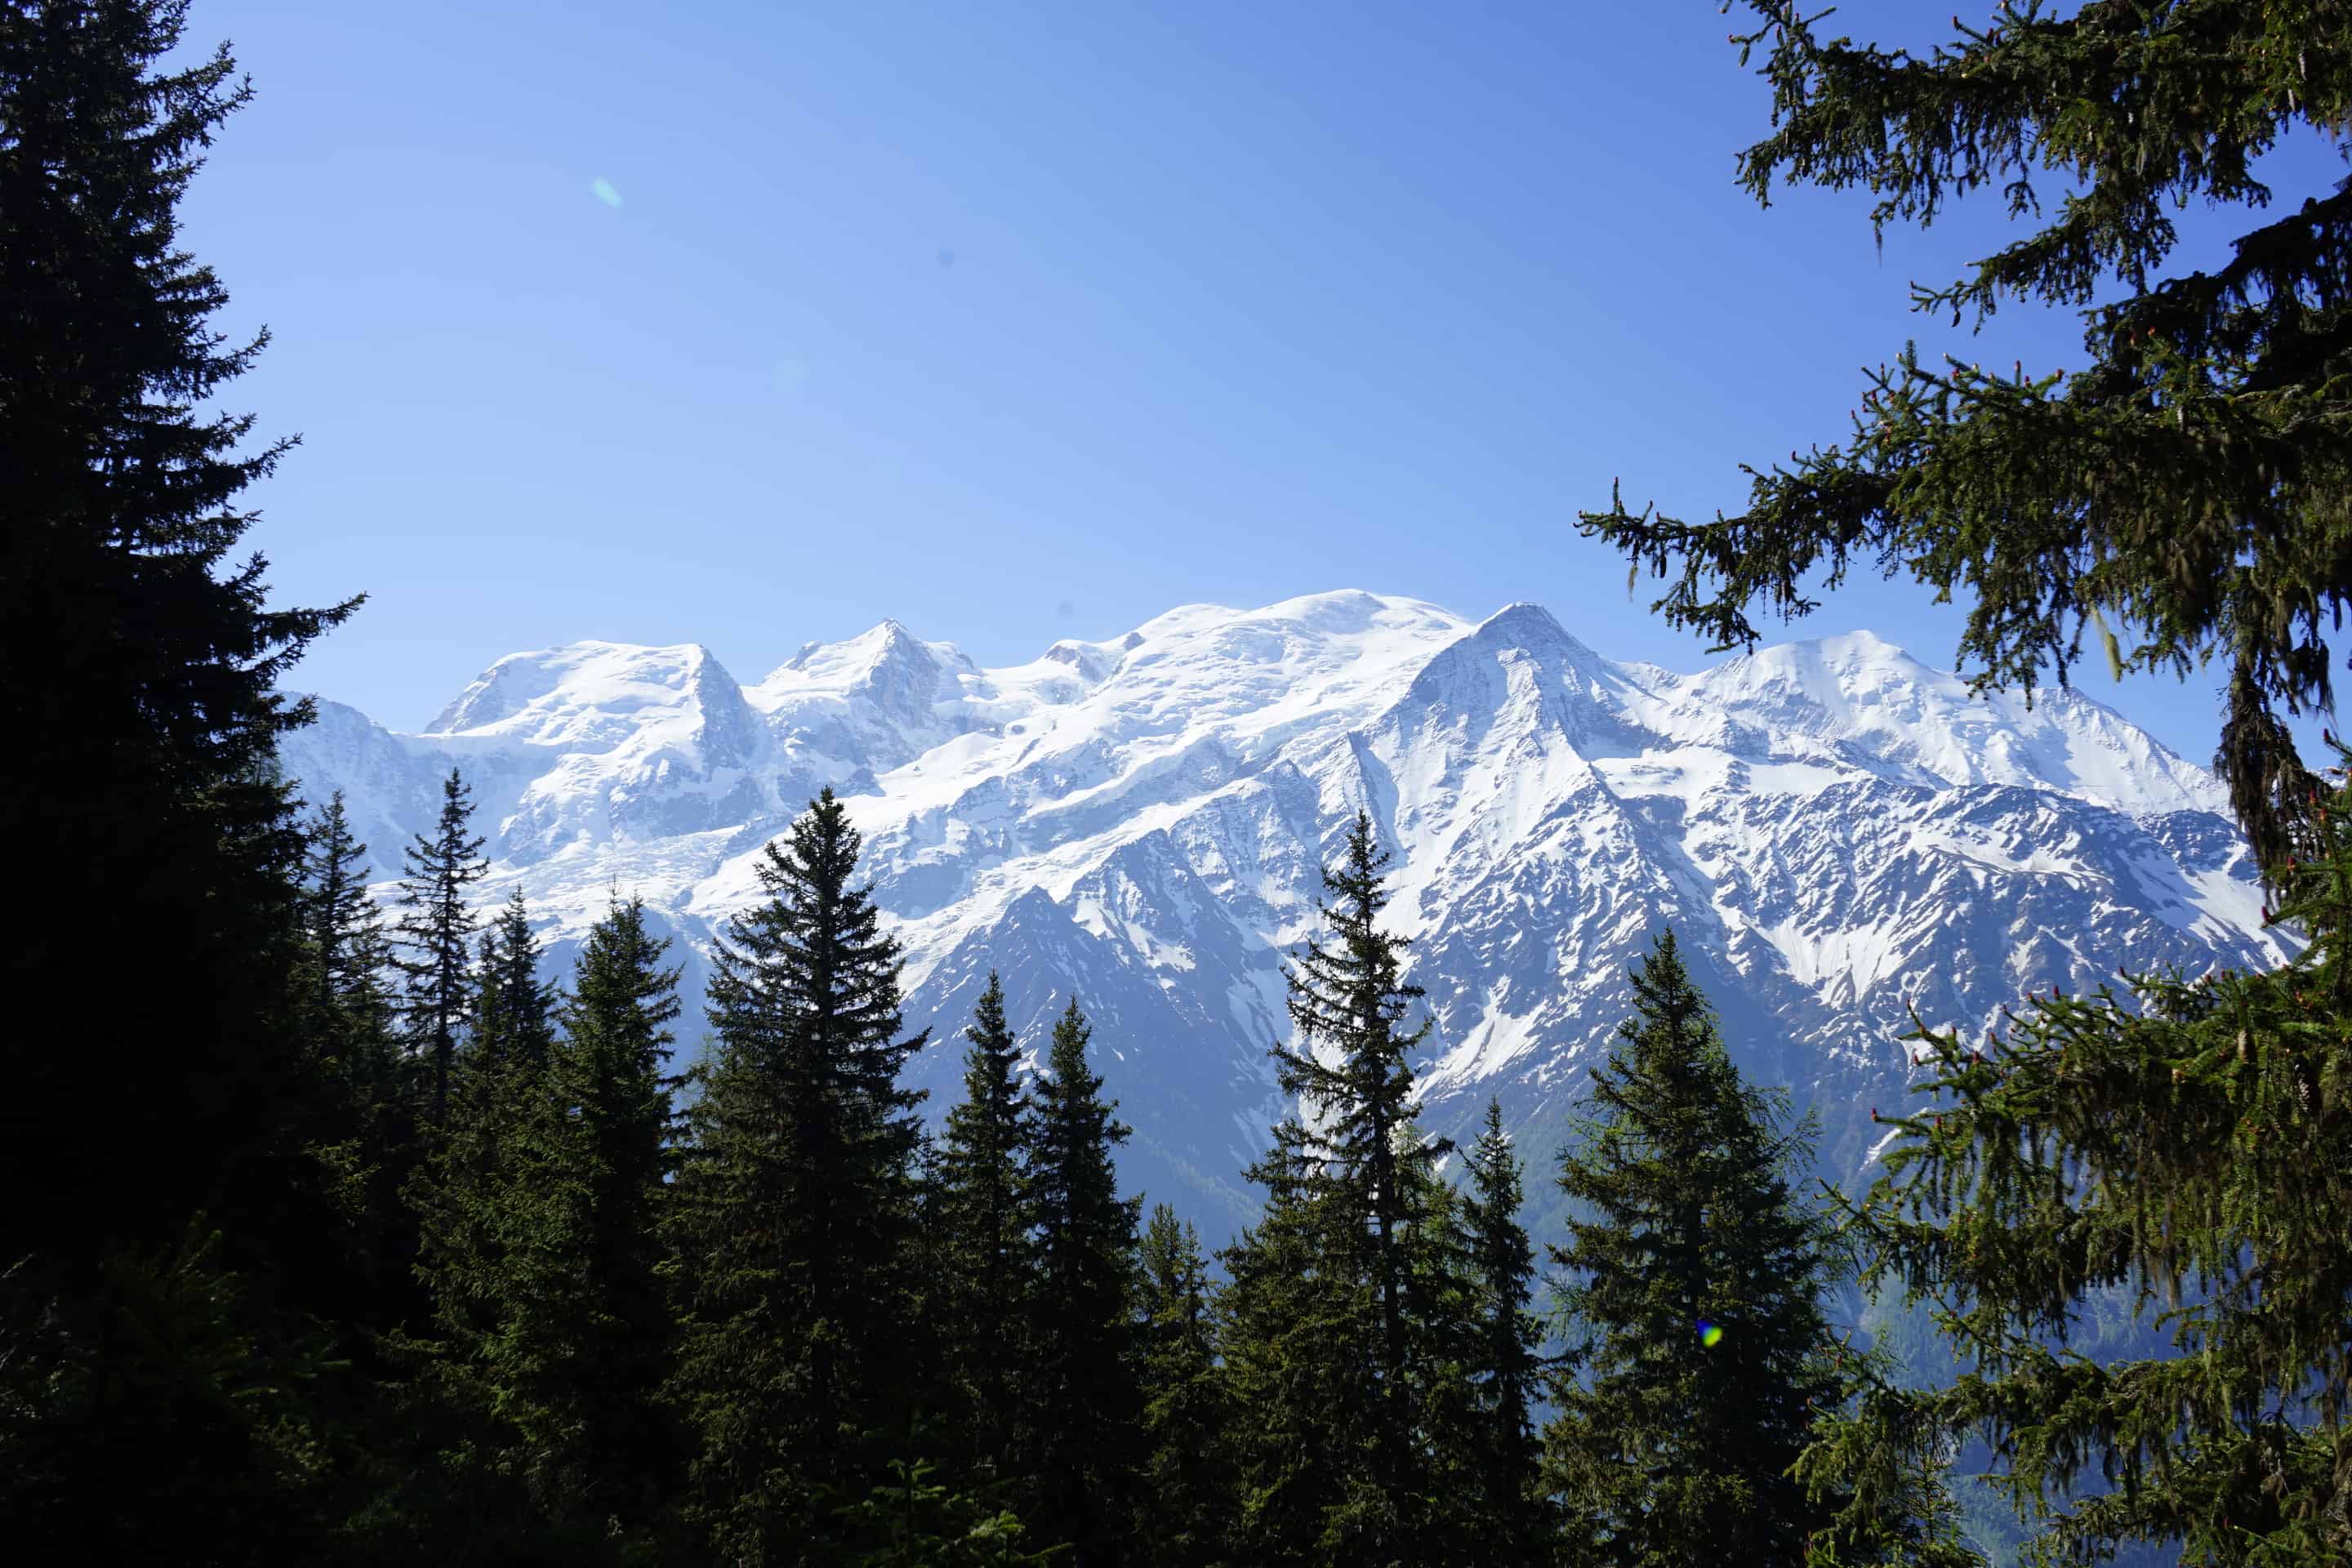 Activities in Chamonix: Take a hike